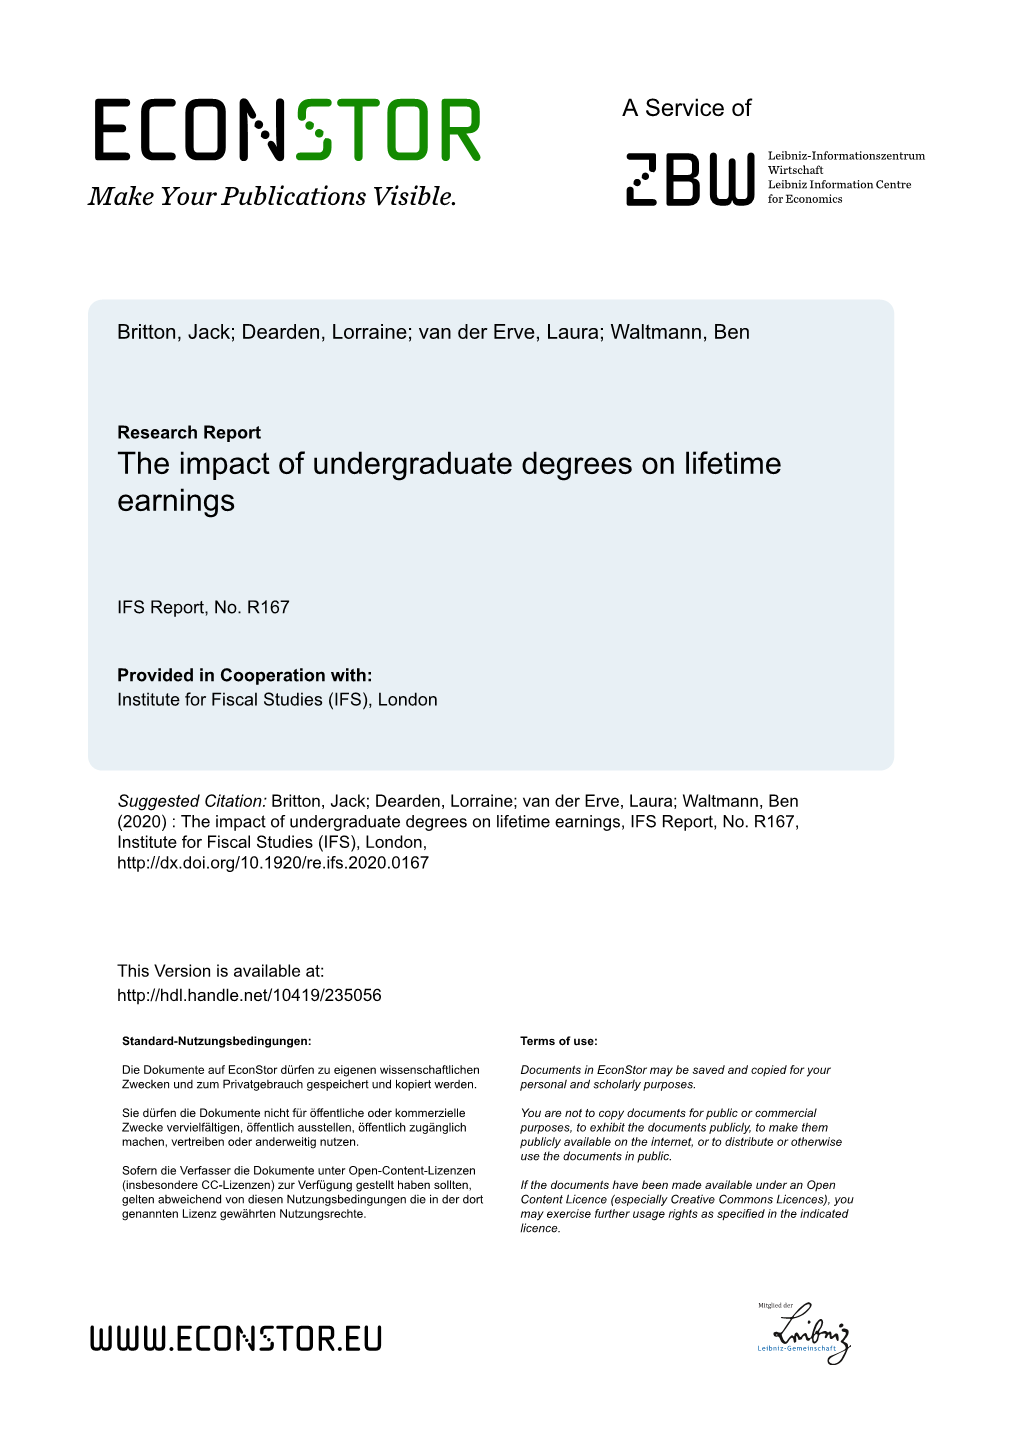 The Impact of Undergraduate Degrees on Lifetime Earnings: Online Appendix